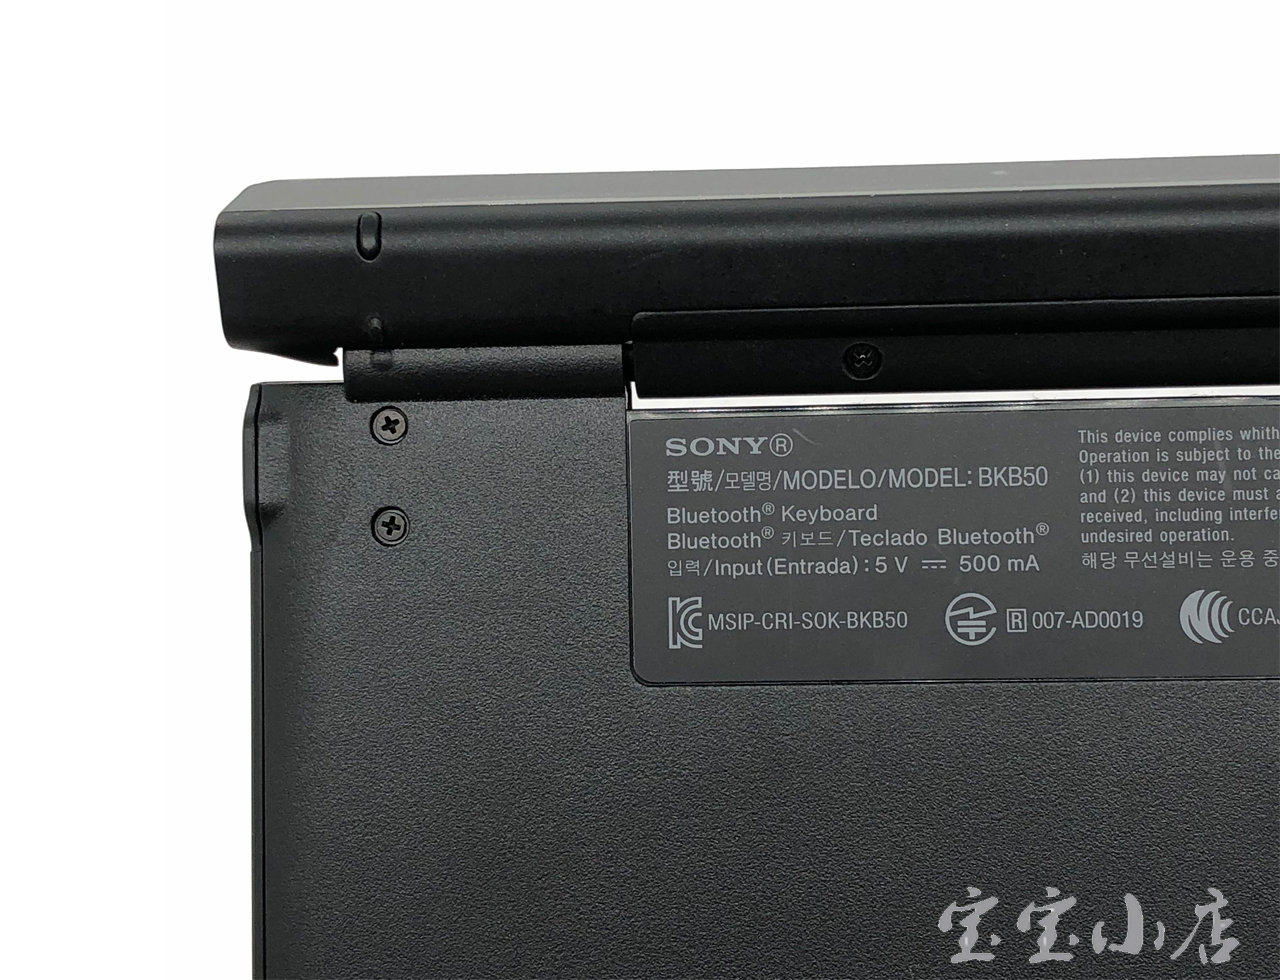 Sony索尼xperia z4 tablet SGP771平板电脑蓝牙键盘拆解